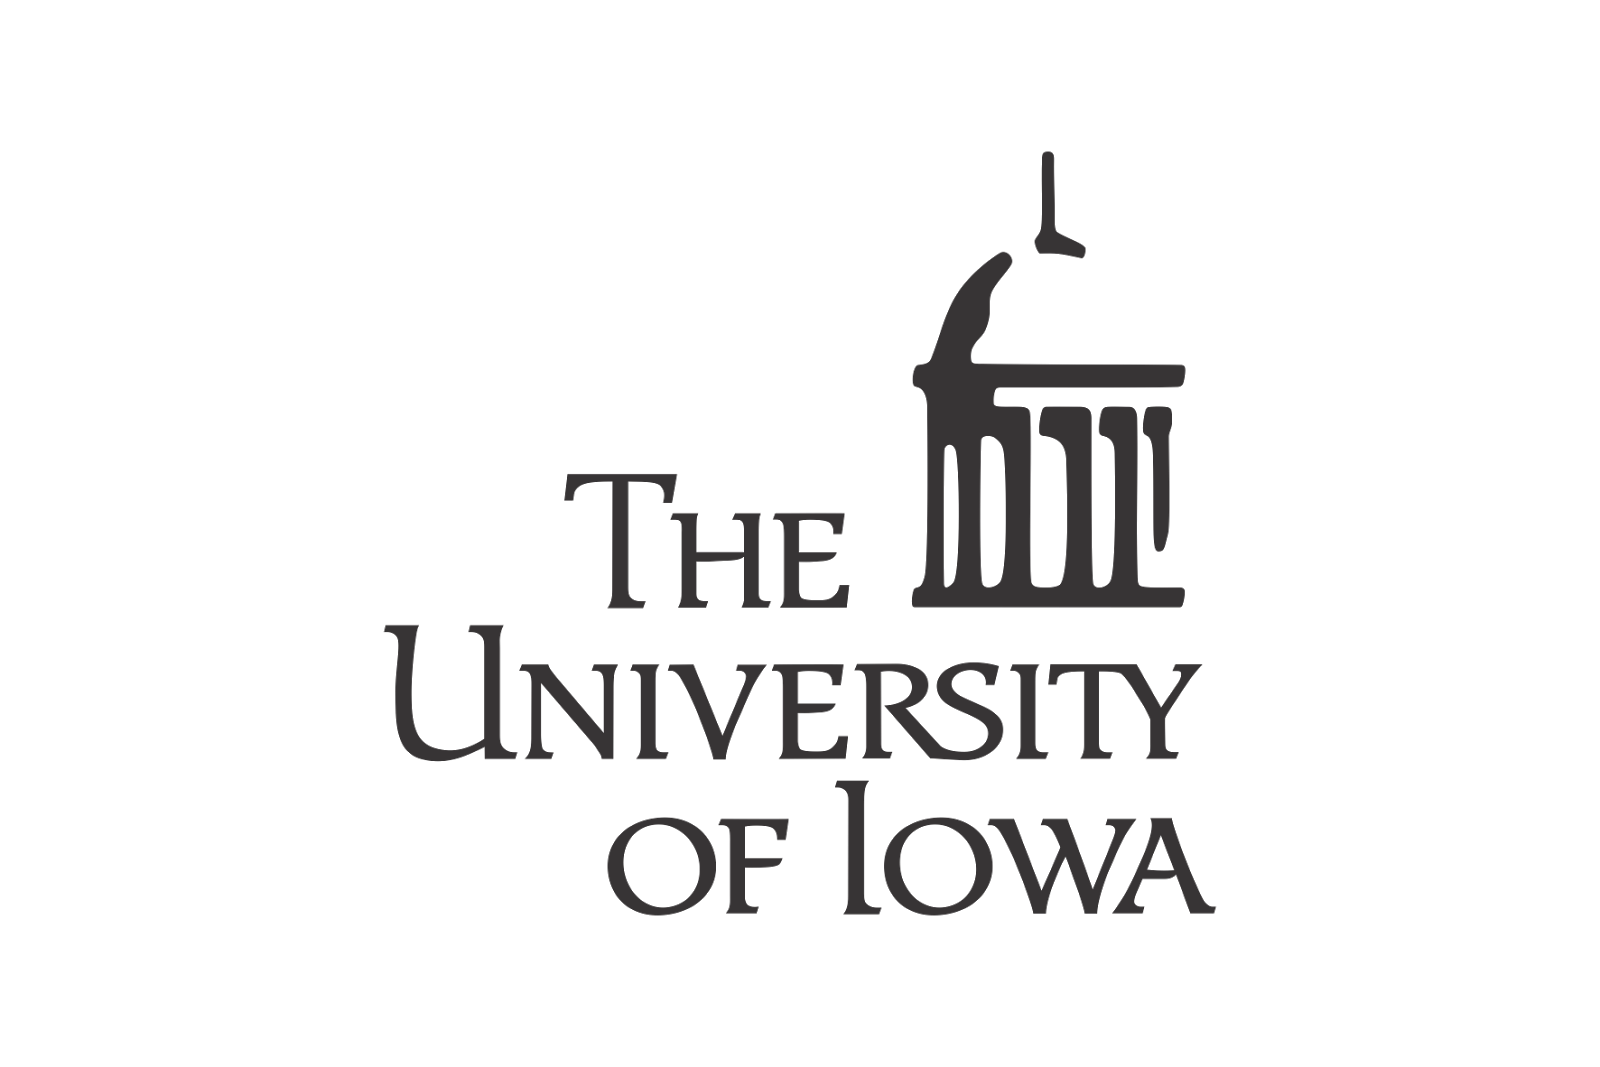 University of Iowa Health Care